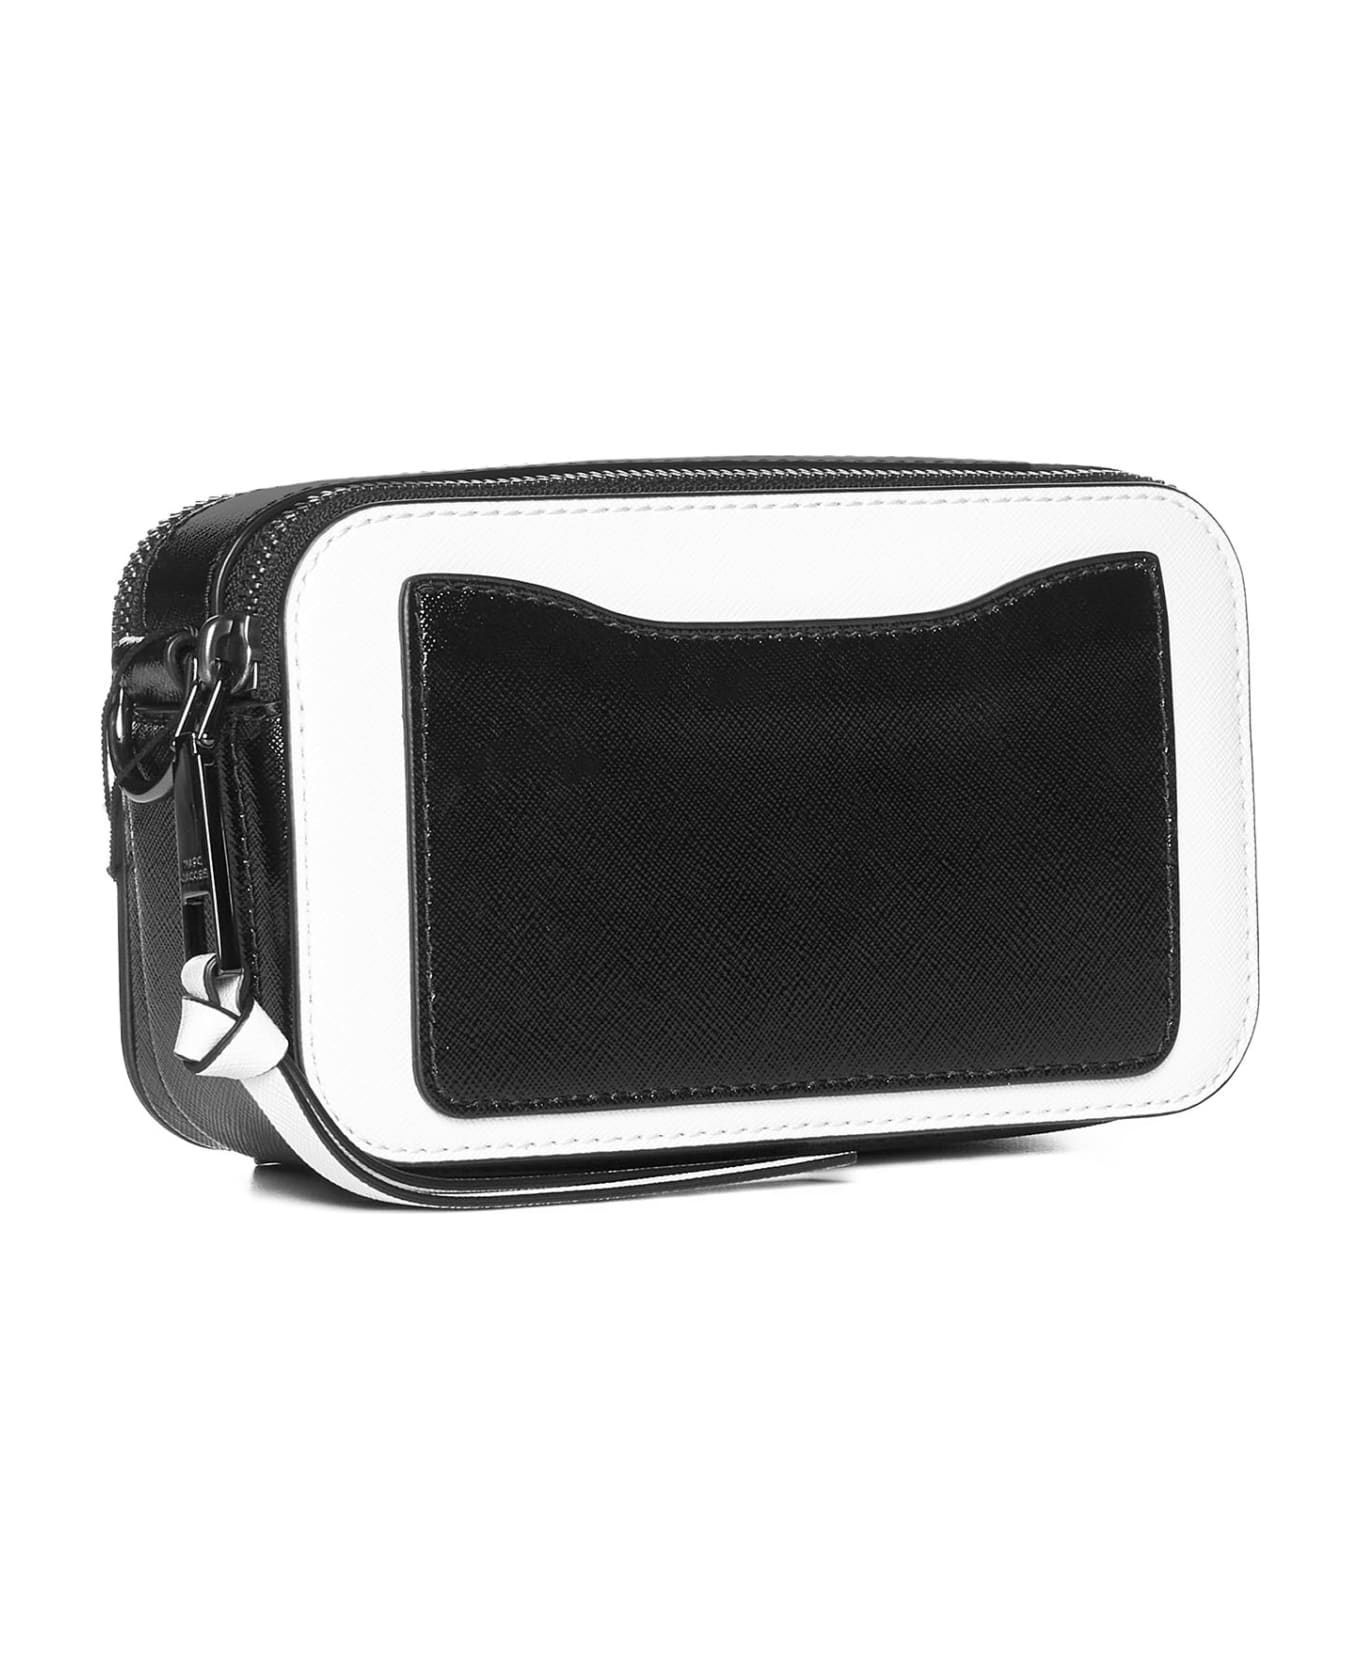 Marc Jacobs Snapshot Camera Bag - Black White